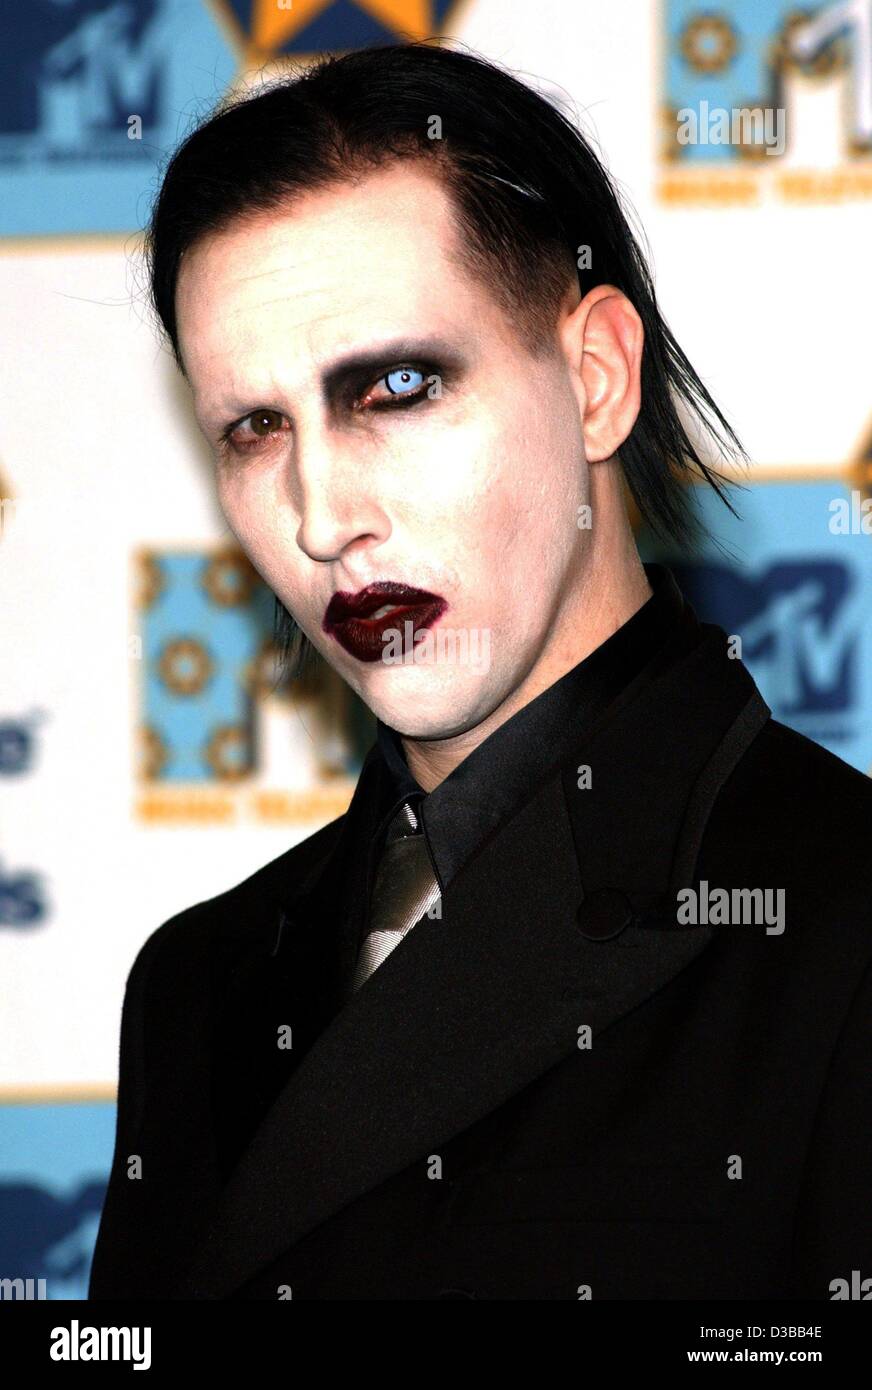 Marilyn Manson, Music